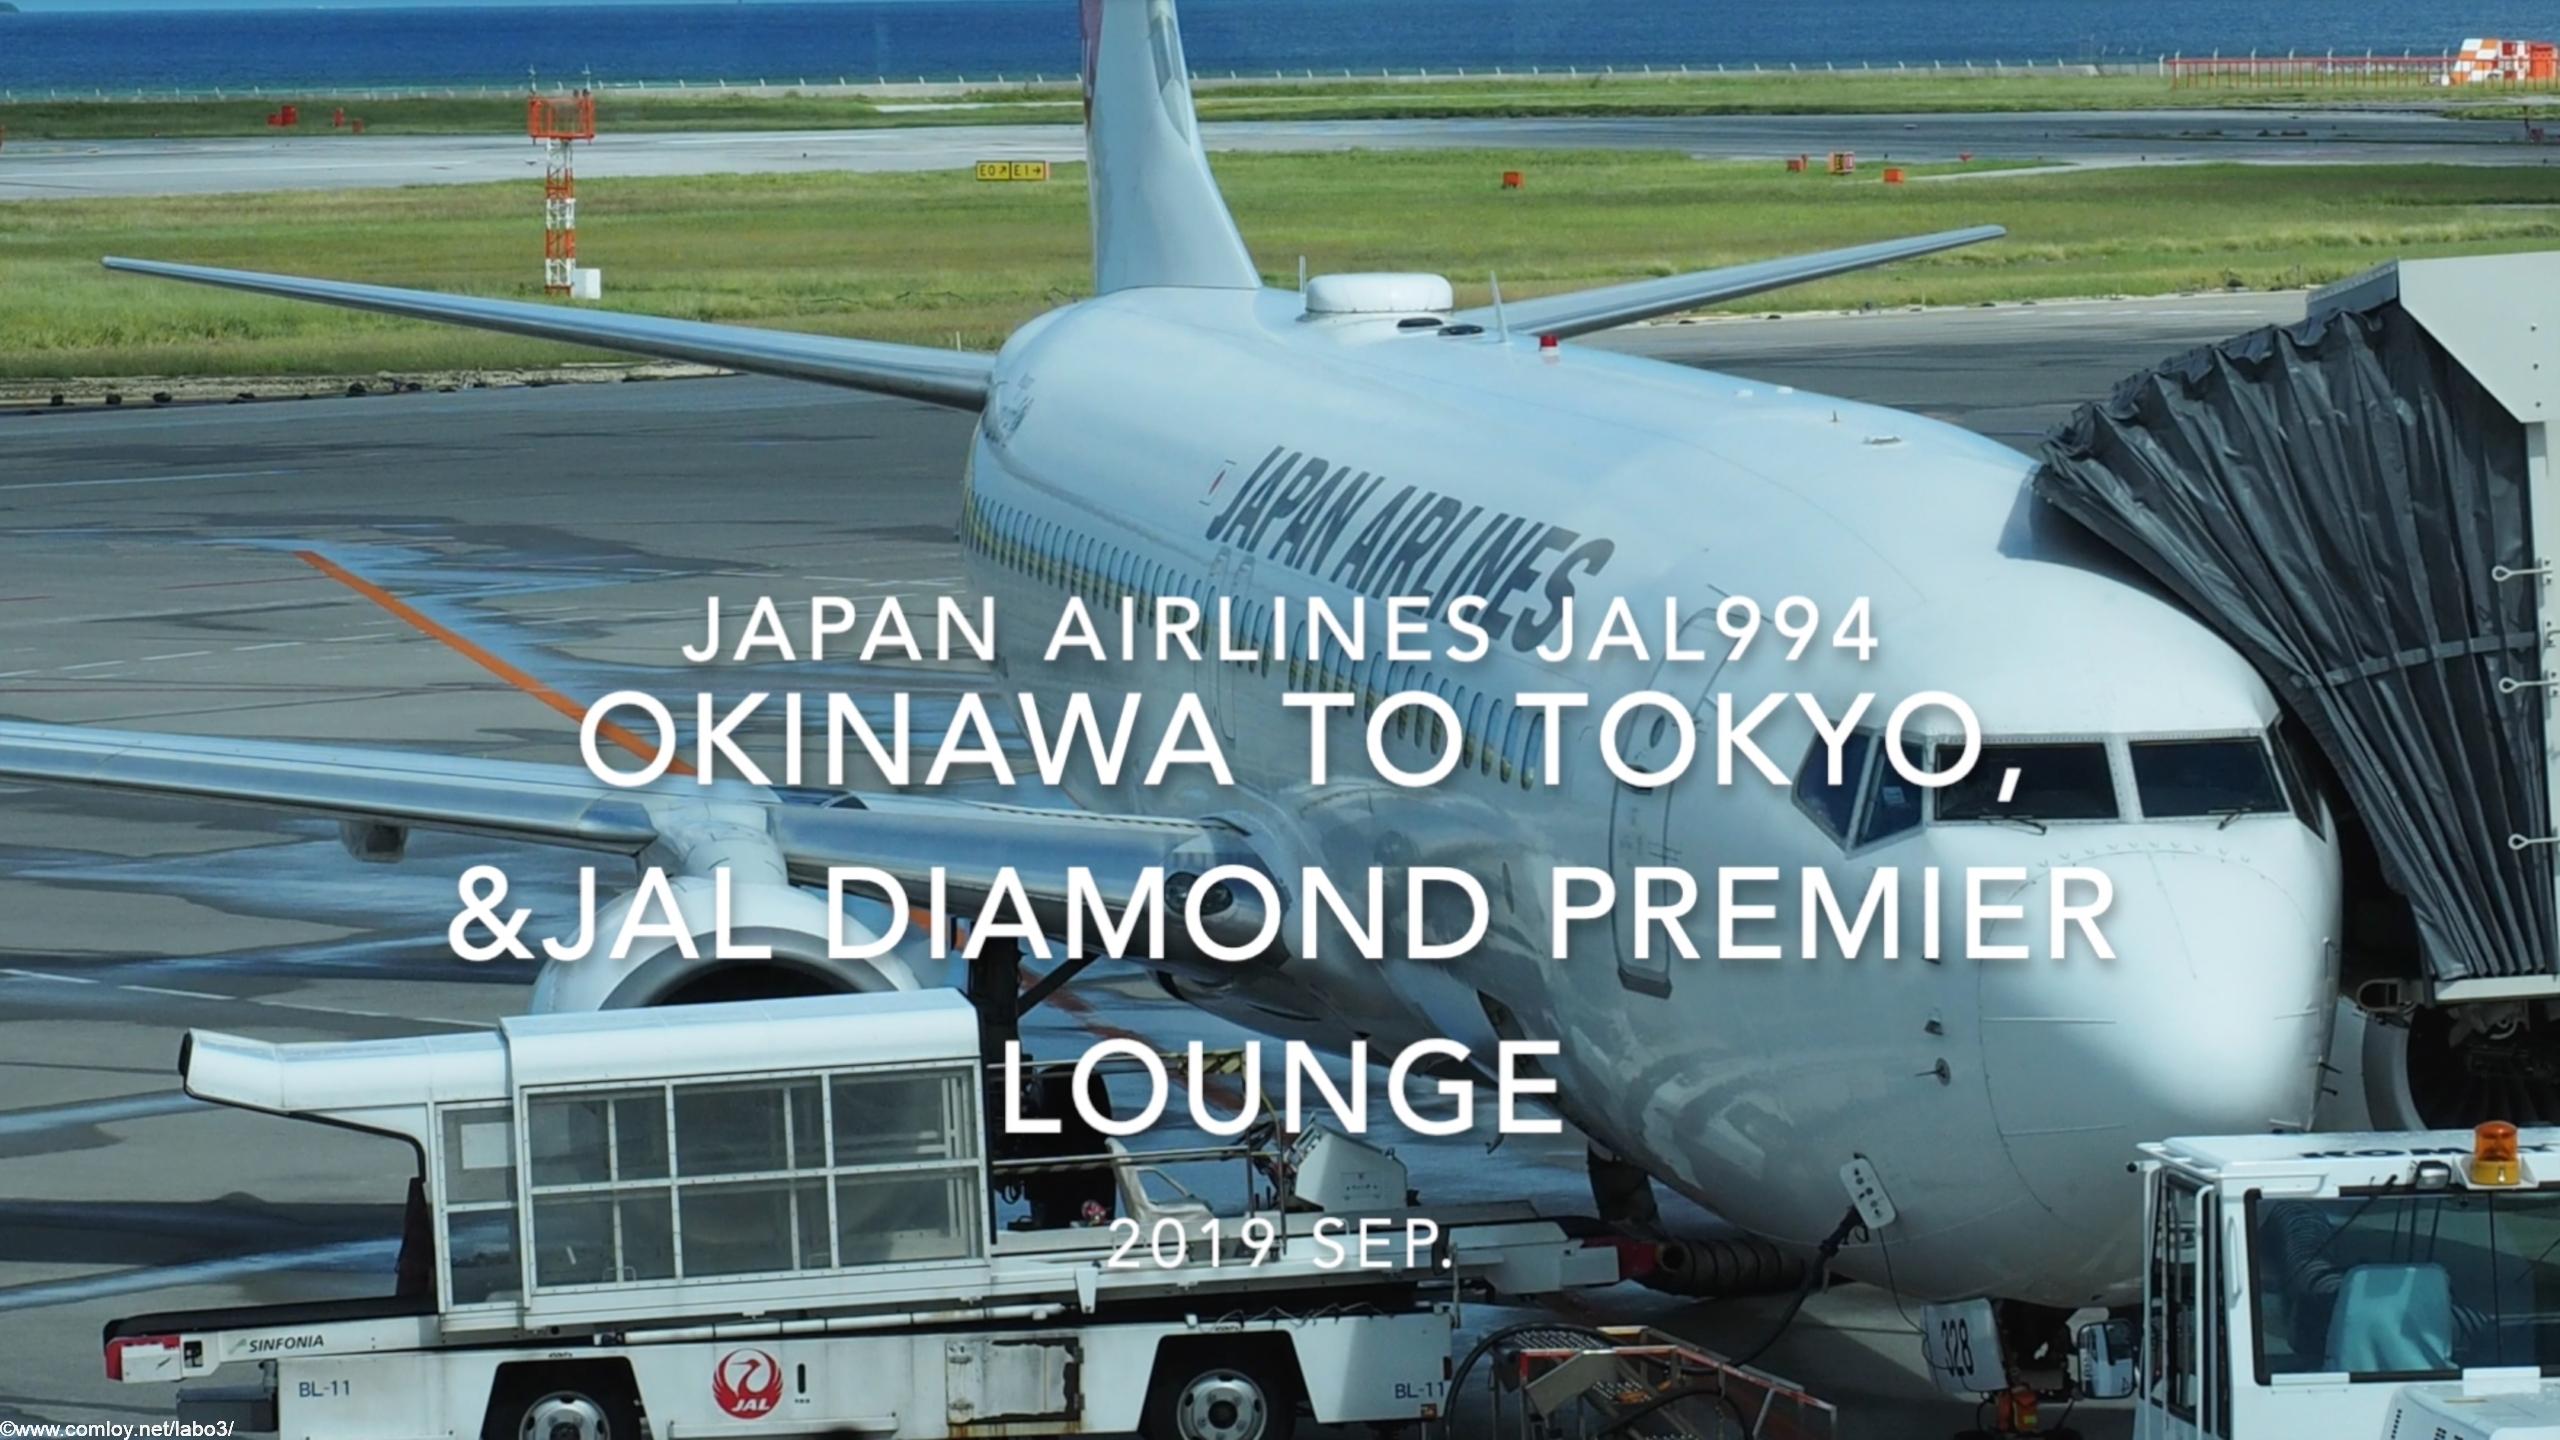 【Flight Report】Japan airlines JAL994 OKINAWA NAHA TO TOKYO HANEDA 2019 SEP 日本航空 那覇 - 羽田 搭乗記